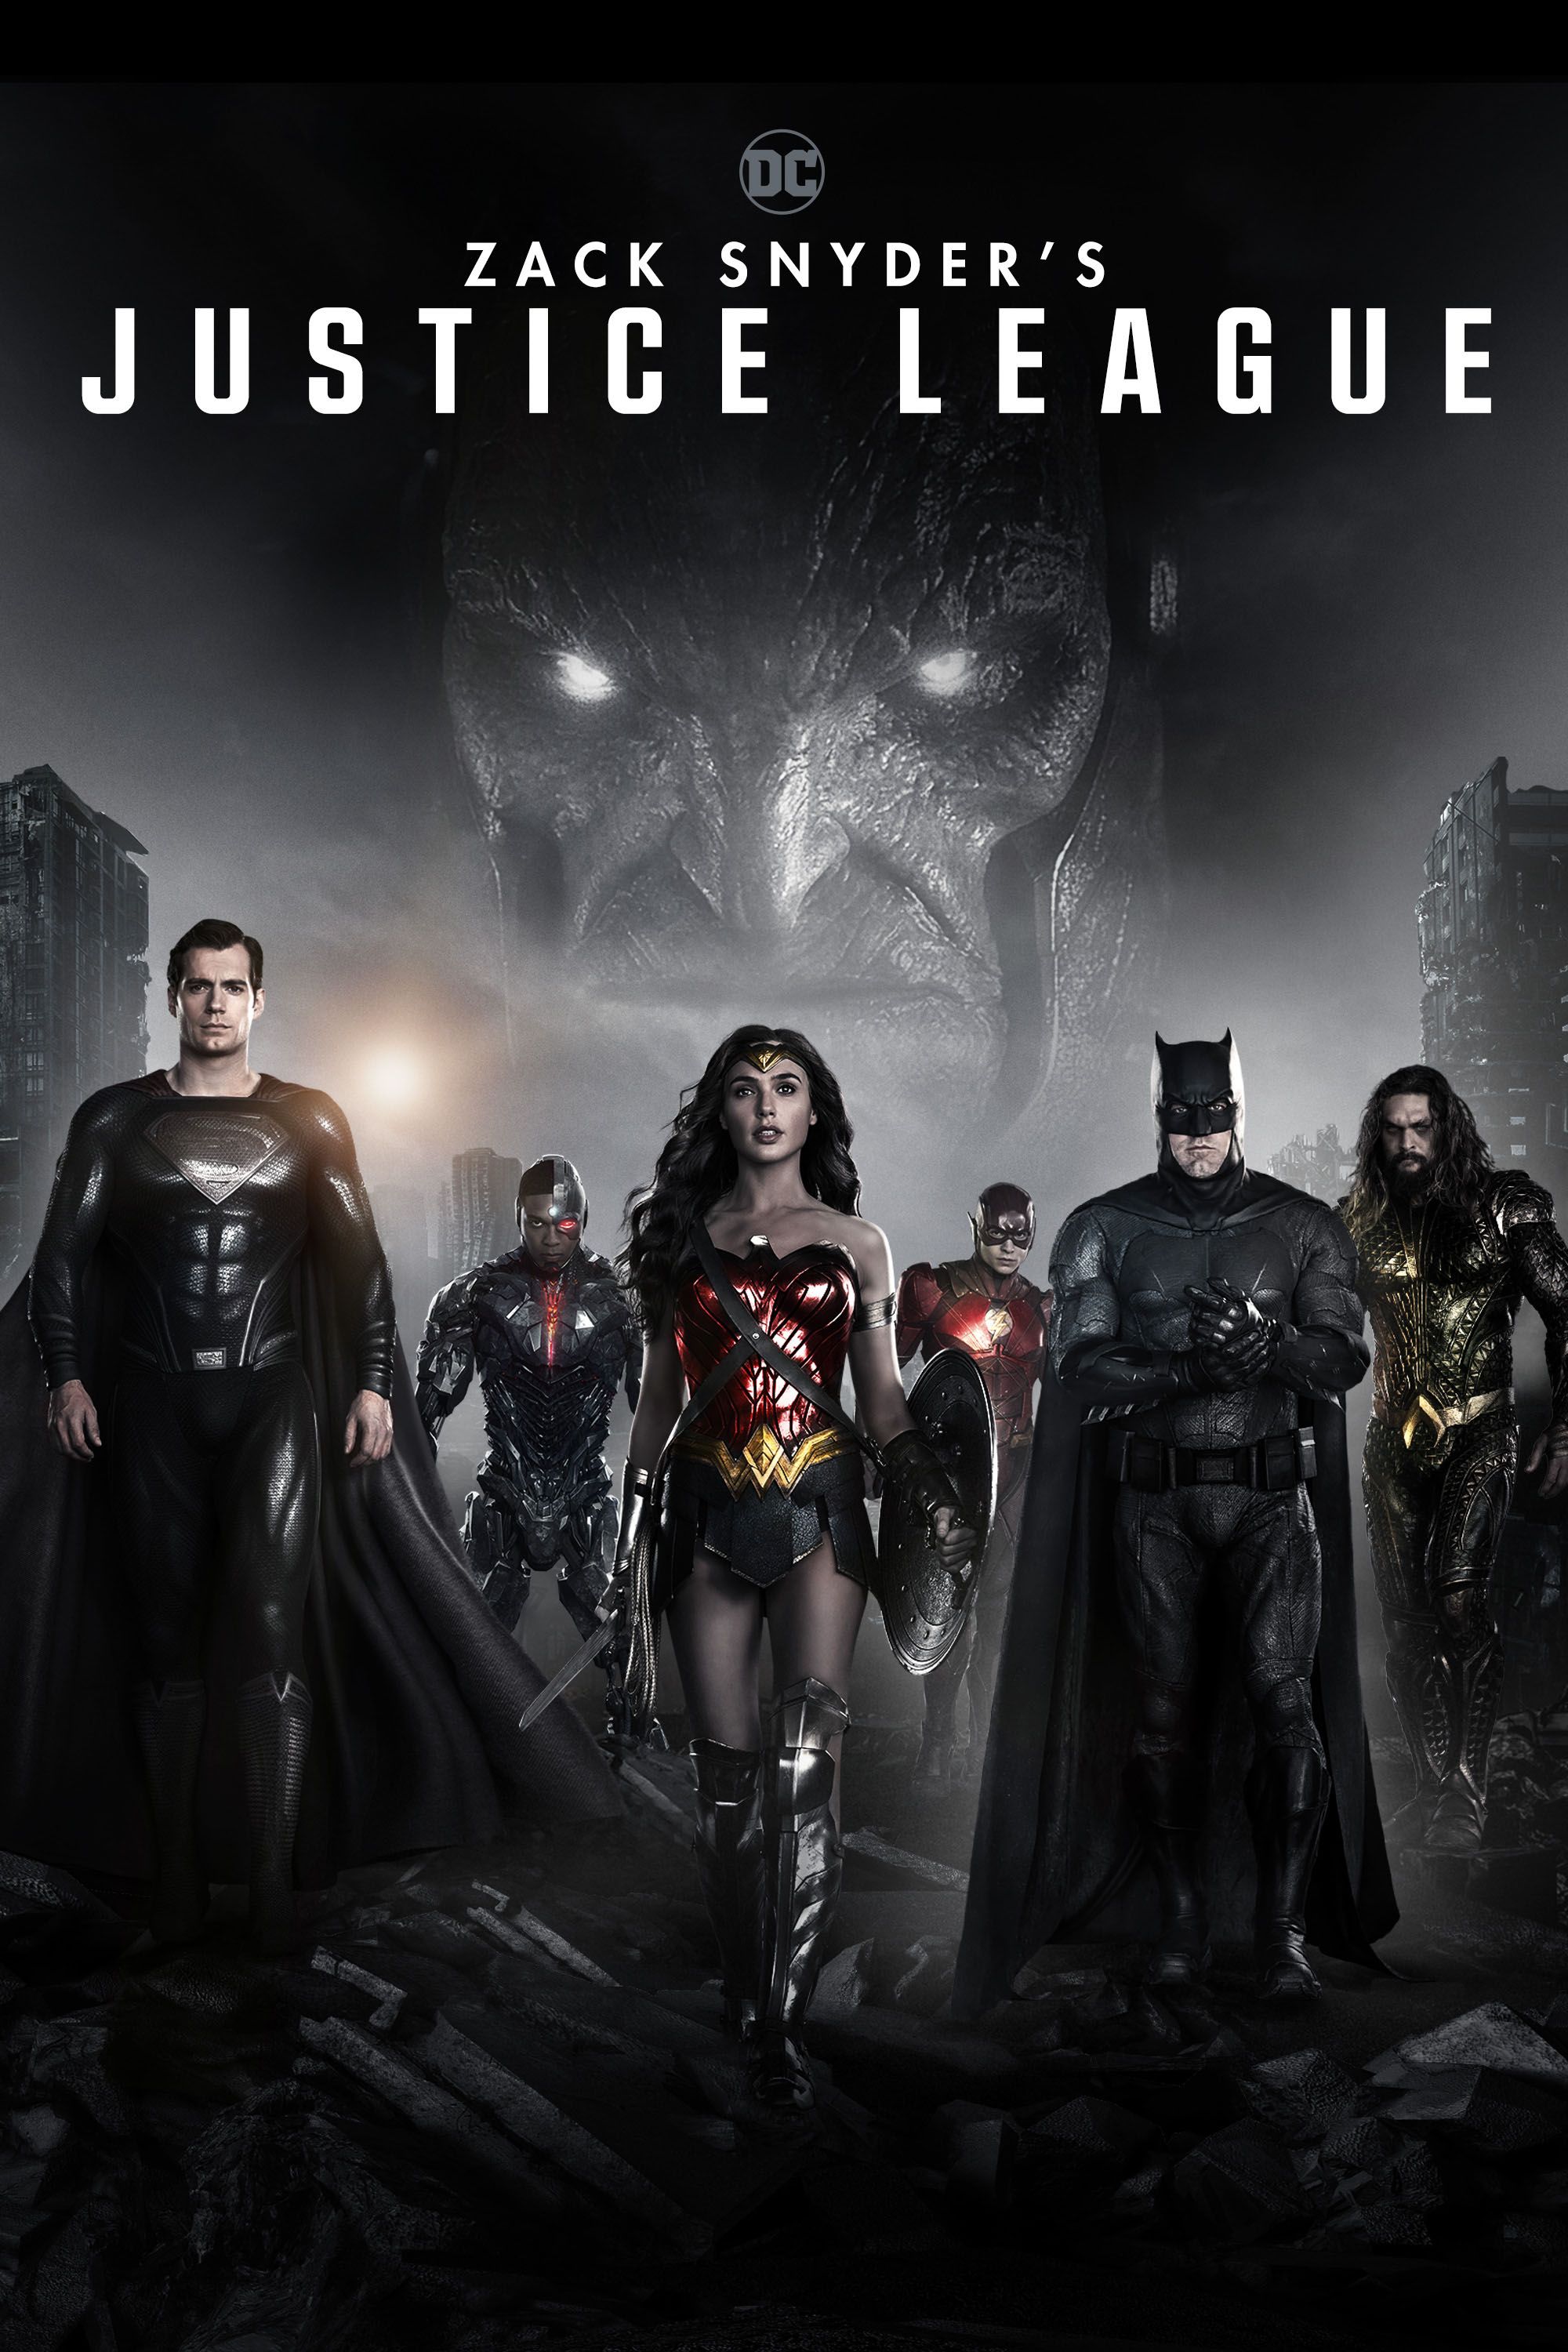 Zack Snyders Justice League Sets Digital Release Date 